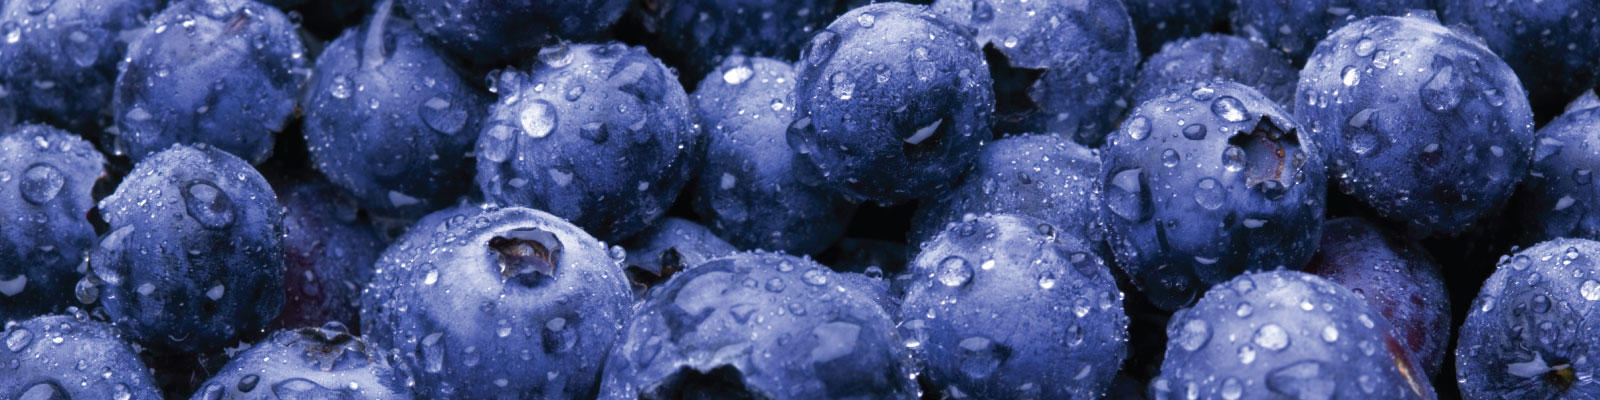 blueberry-farms-banner.jpg